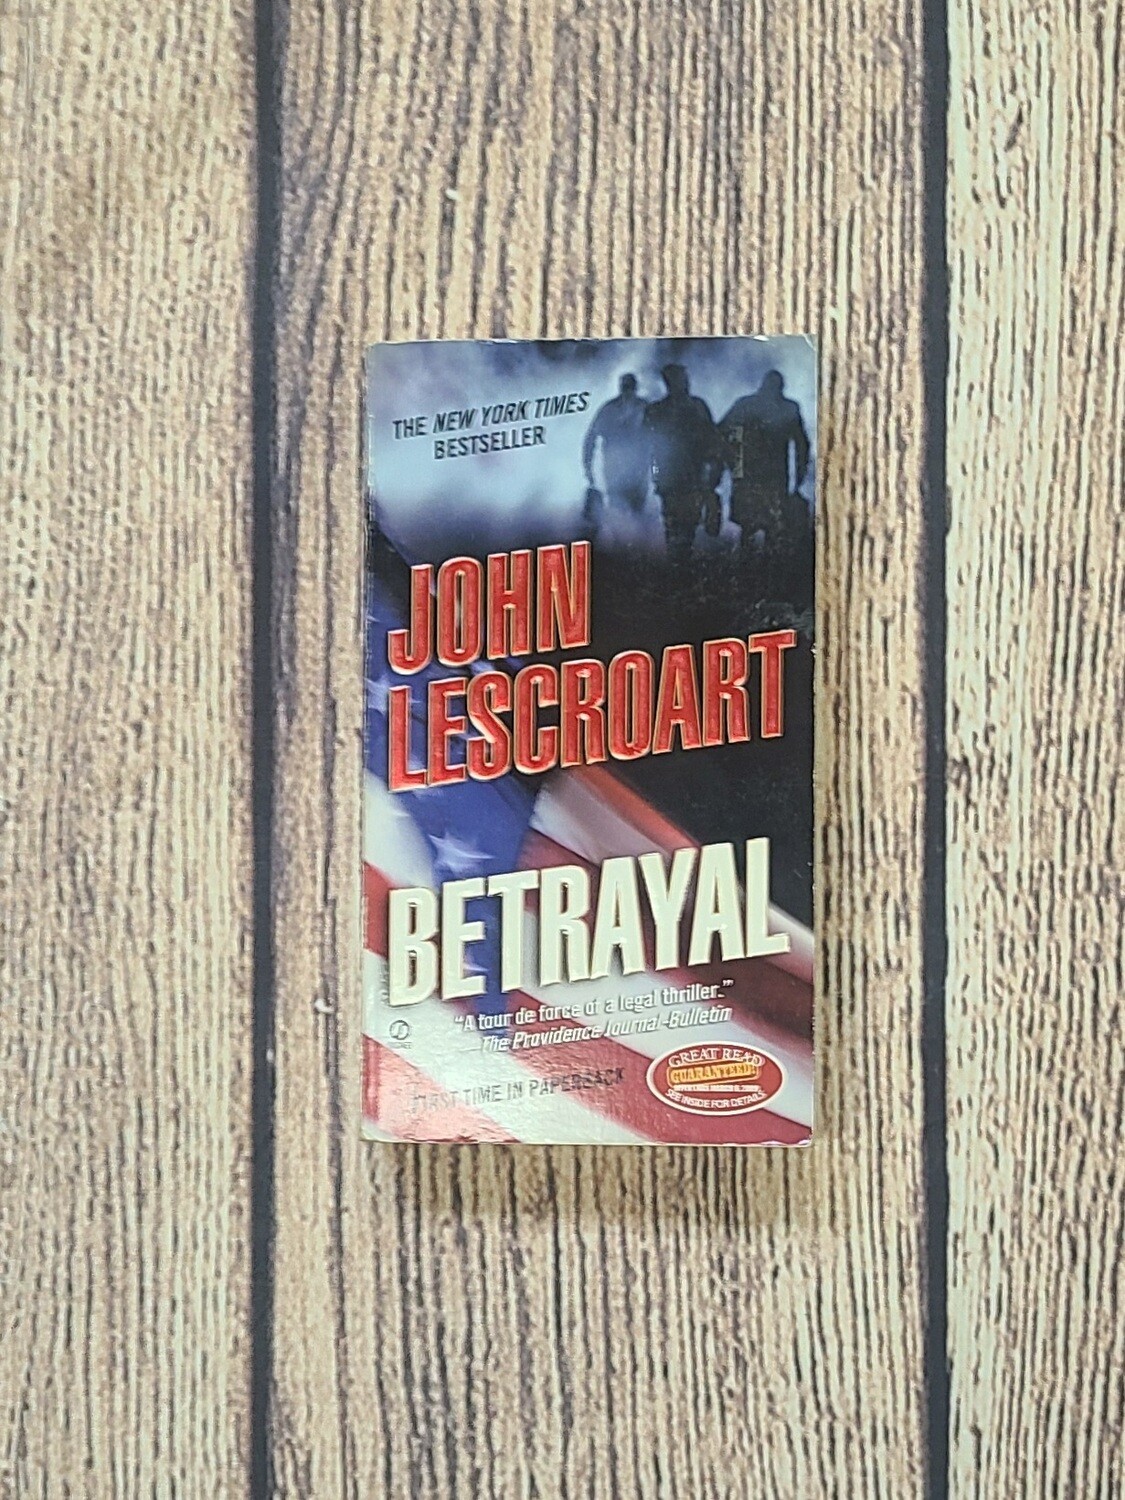 Betrayal by John Lescroart